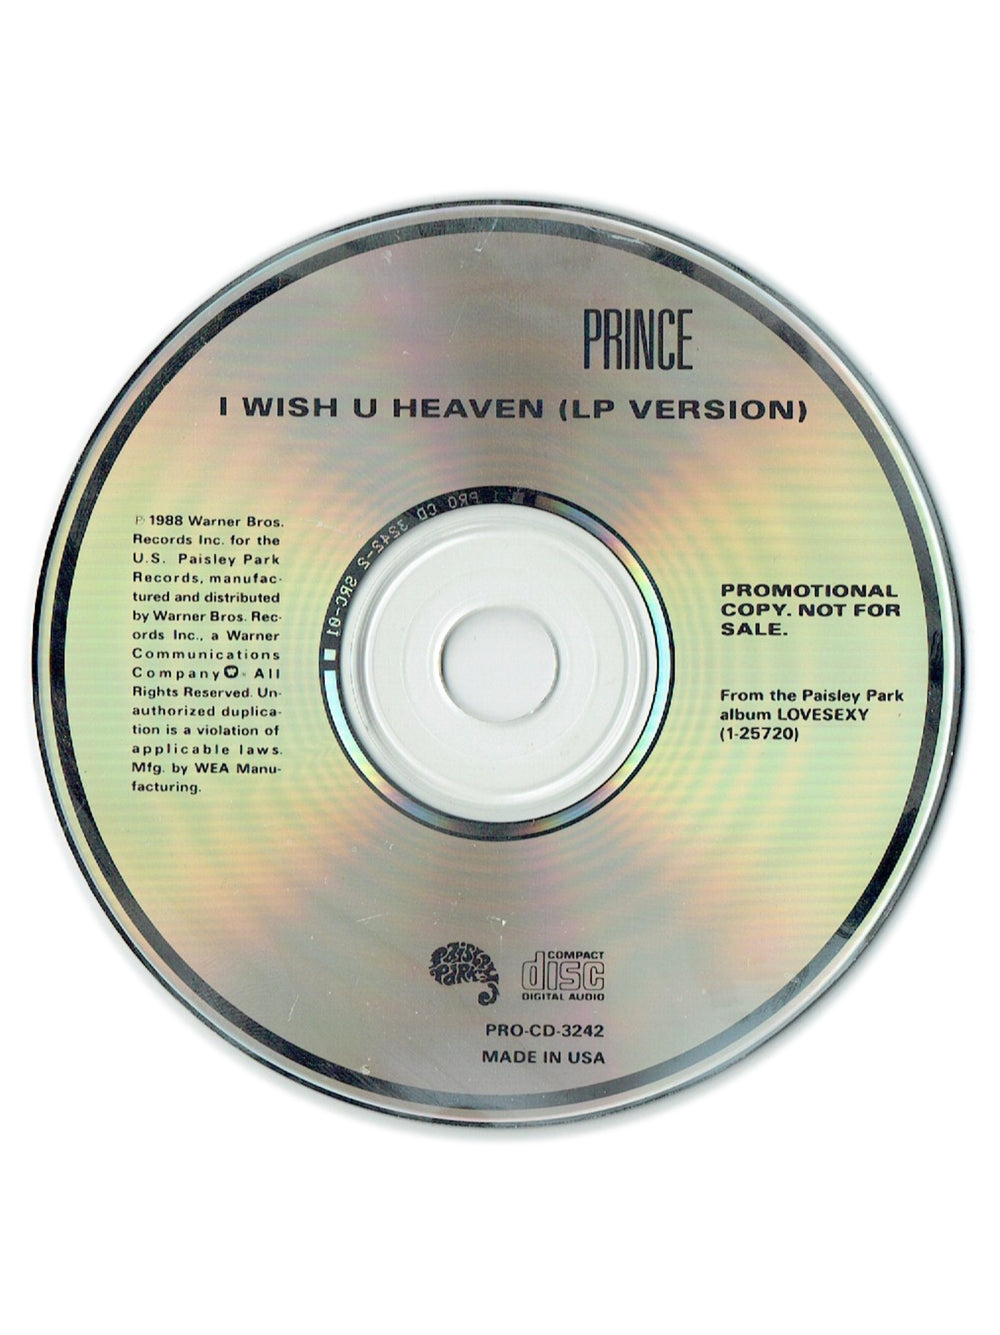 Prince – I Wish U Heaven Promotional Only CD Single 1 Track USA Release 1988